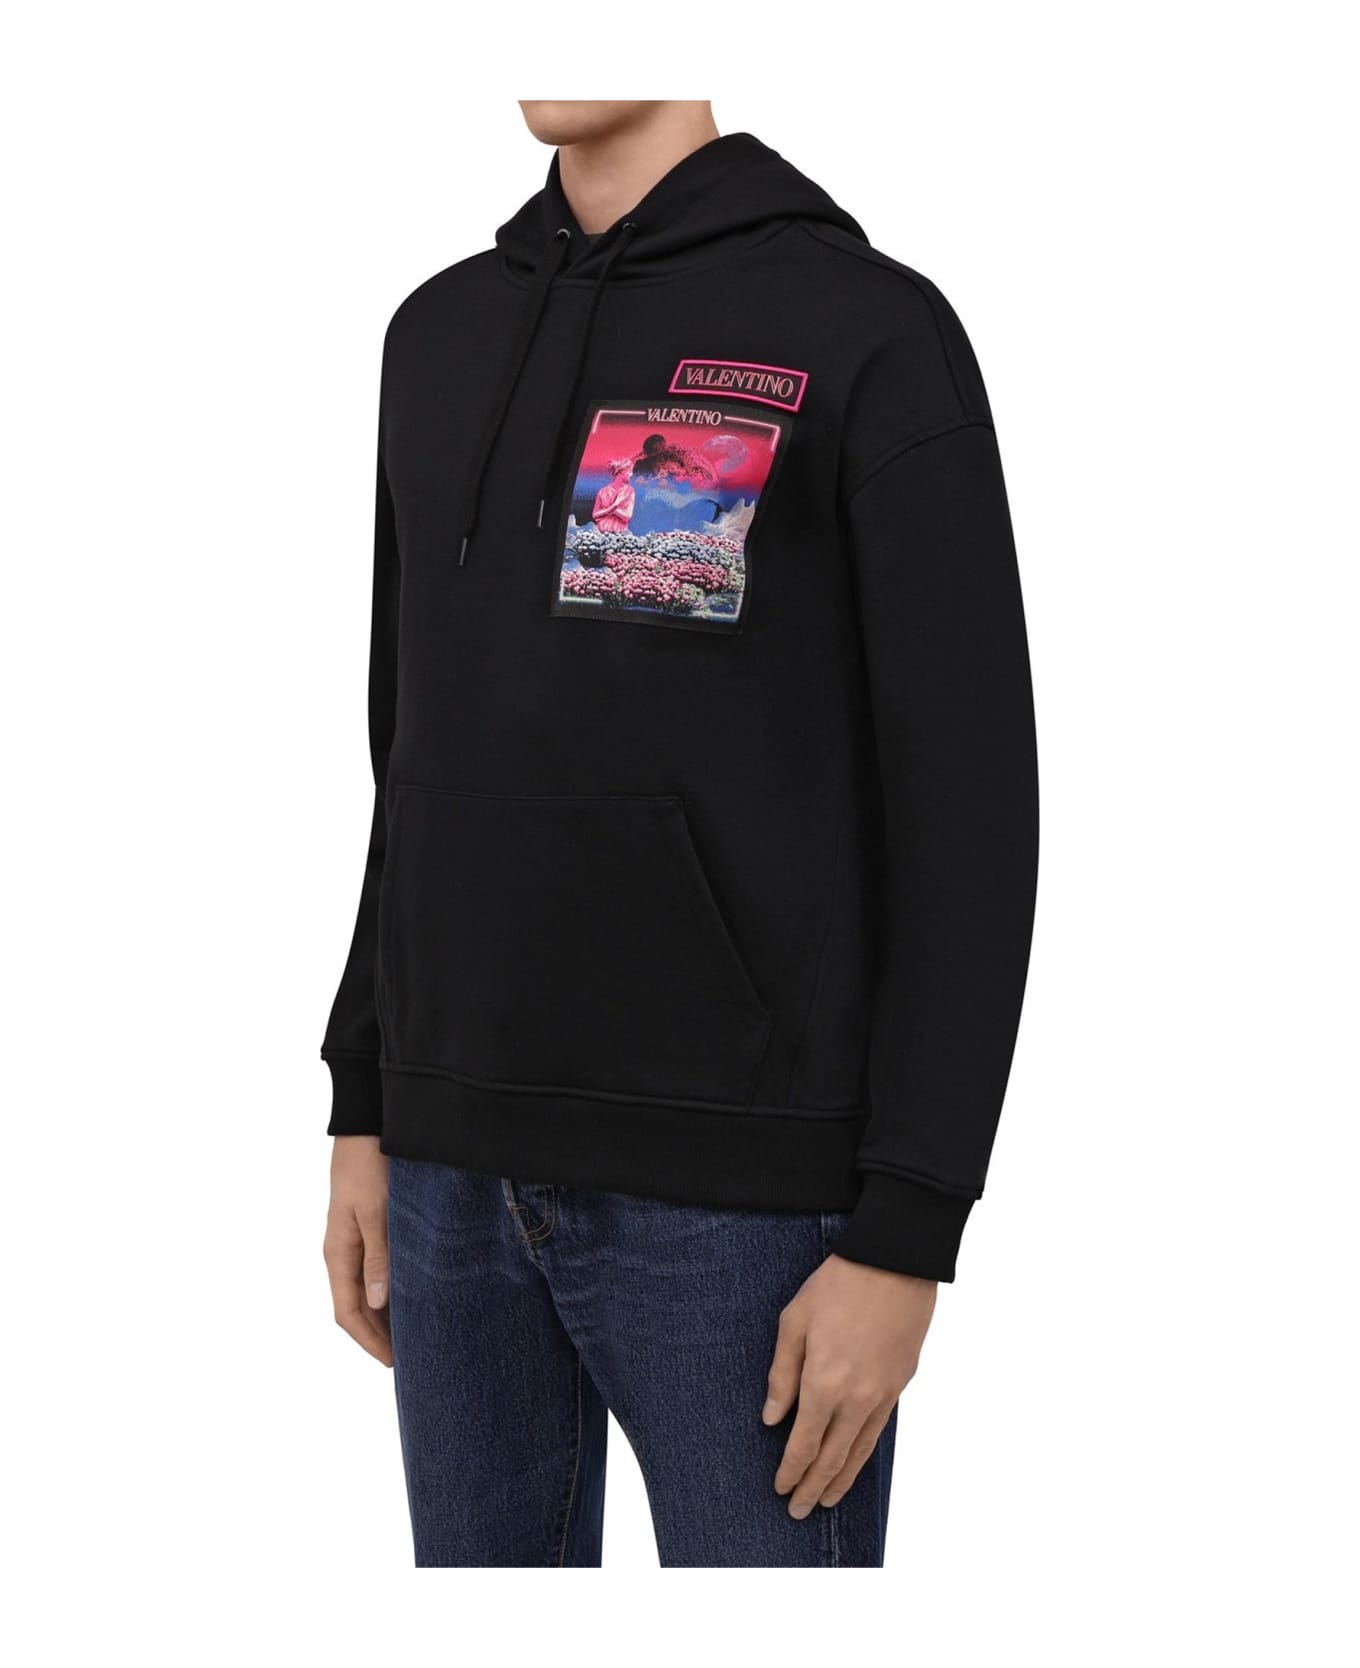 Valentino Neon Universe Sweatshirt - Black